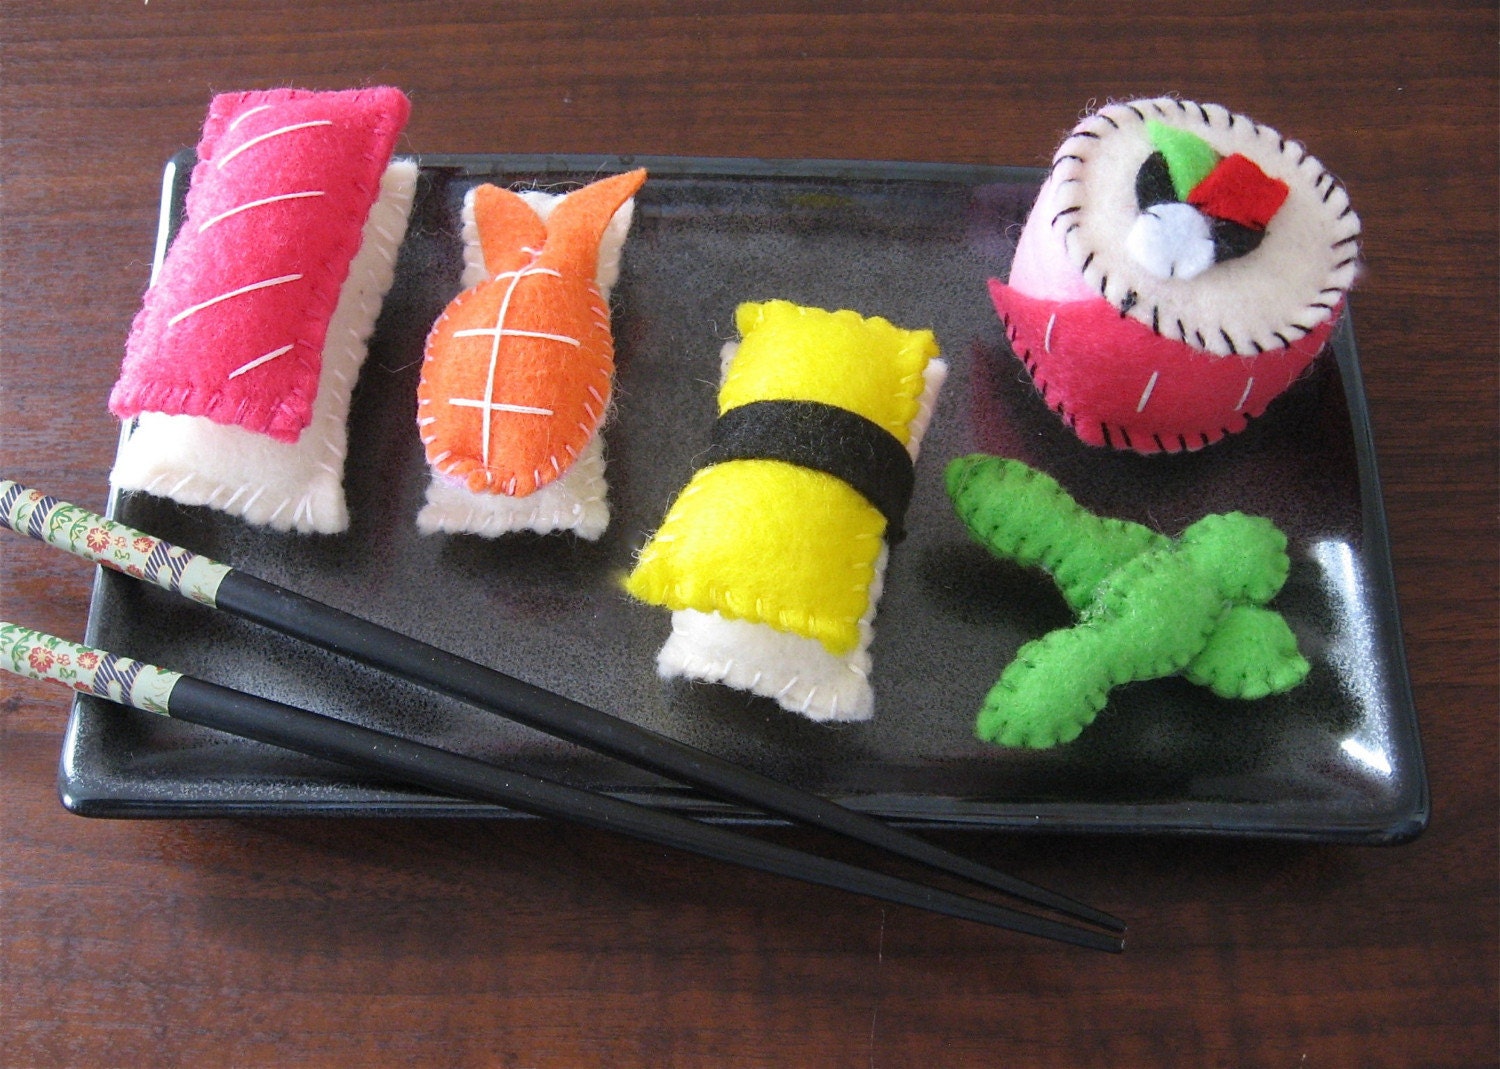 Sushi Magnet Set